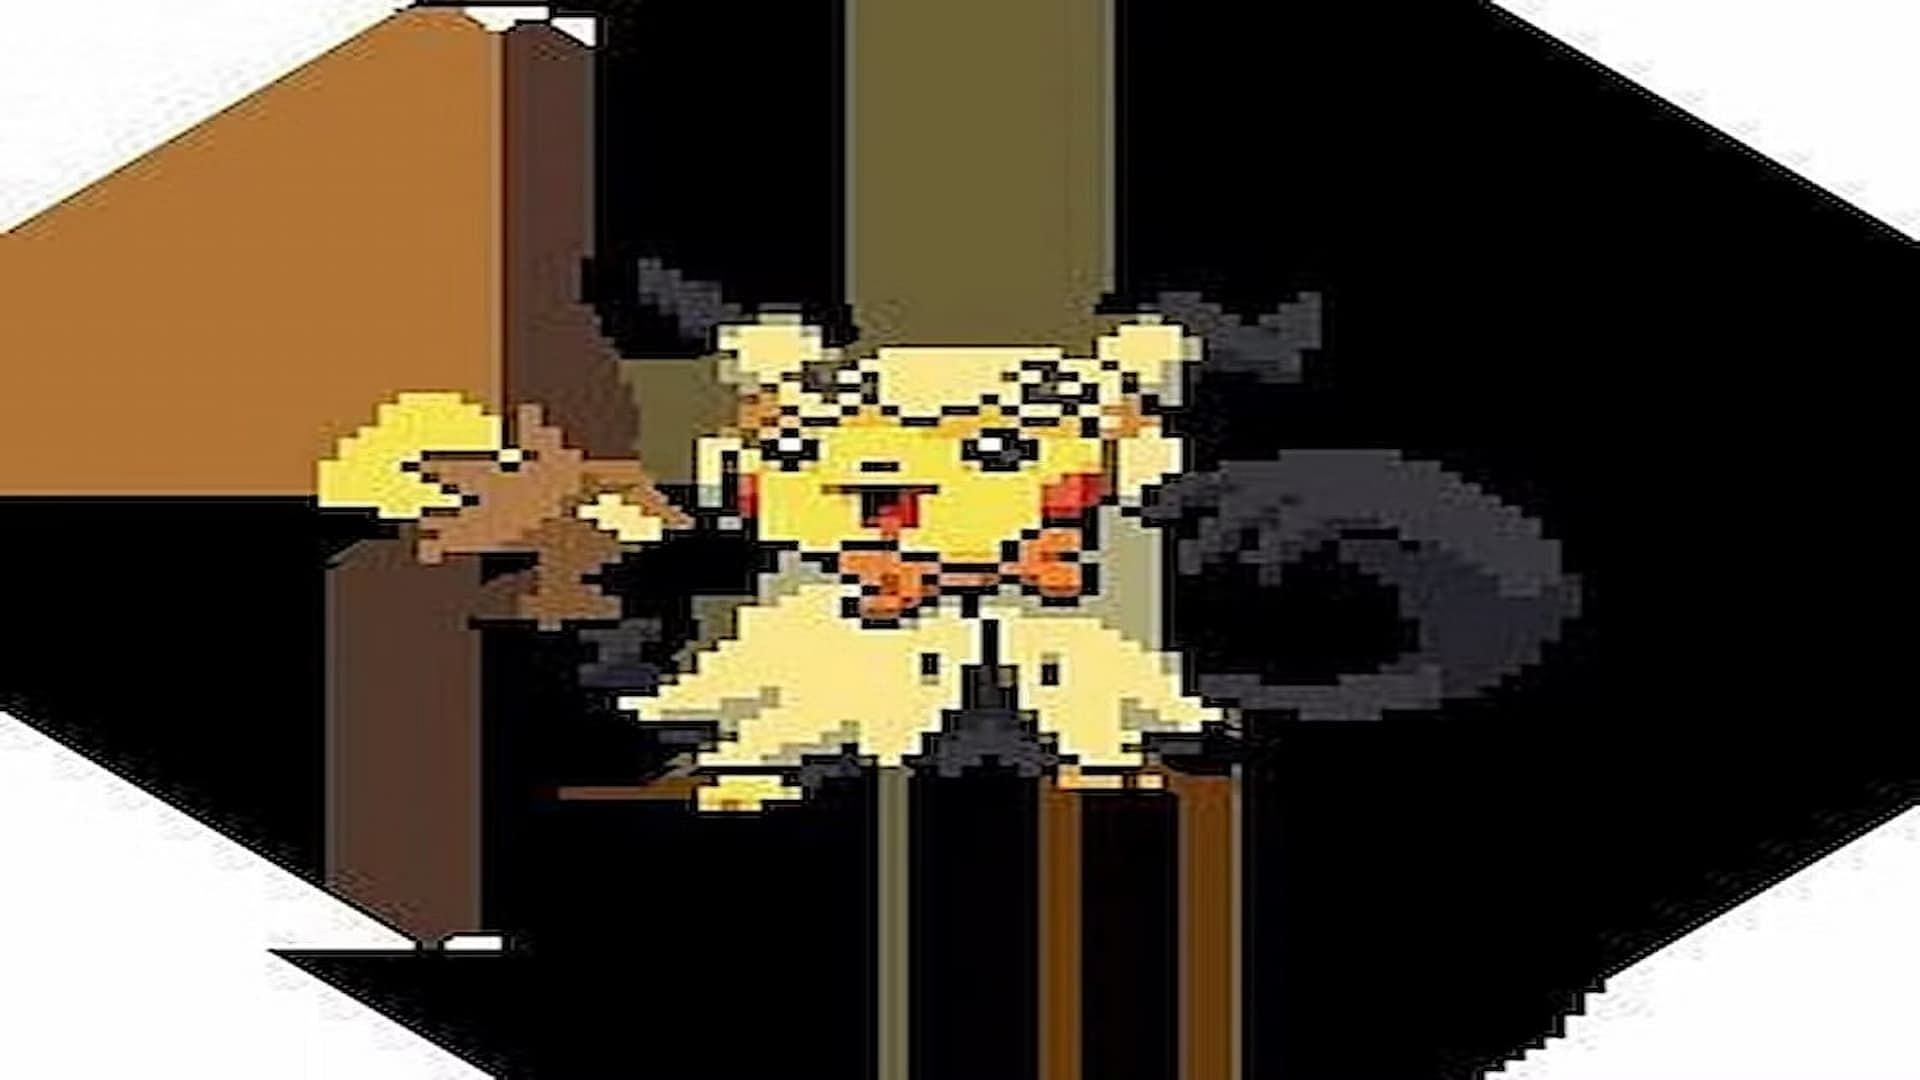 A fusion of Mimikyu and Pikachu (Image via Schrroms)